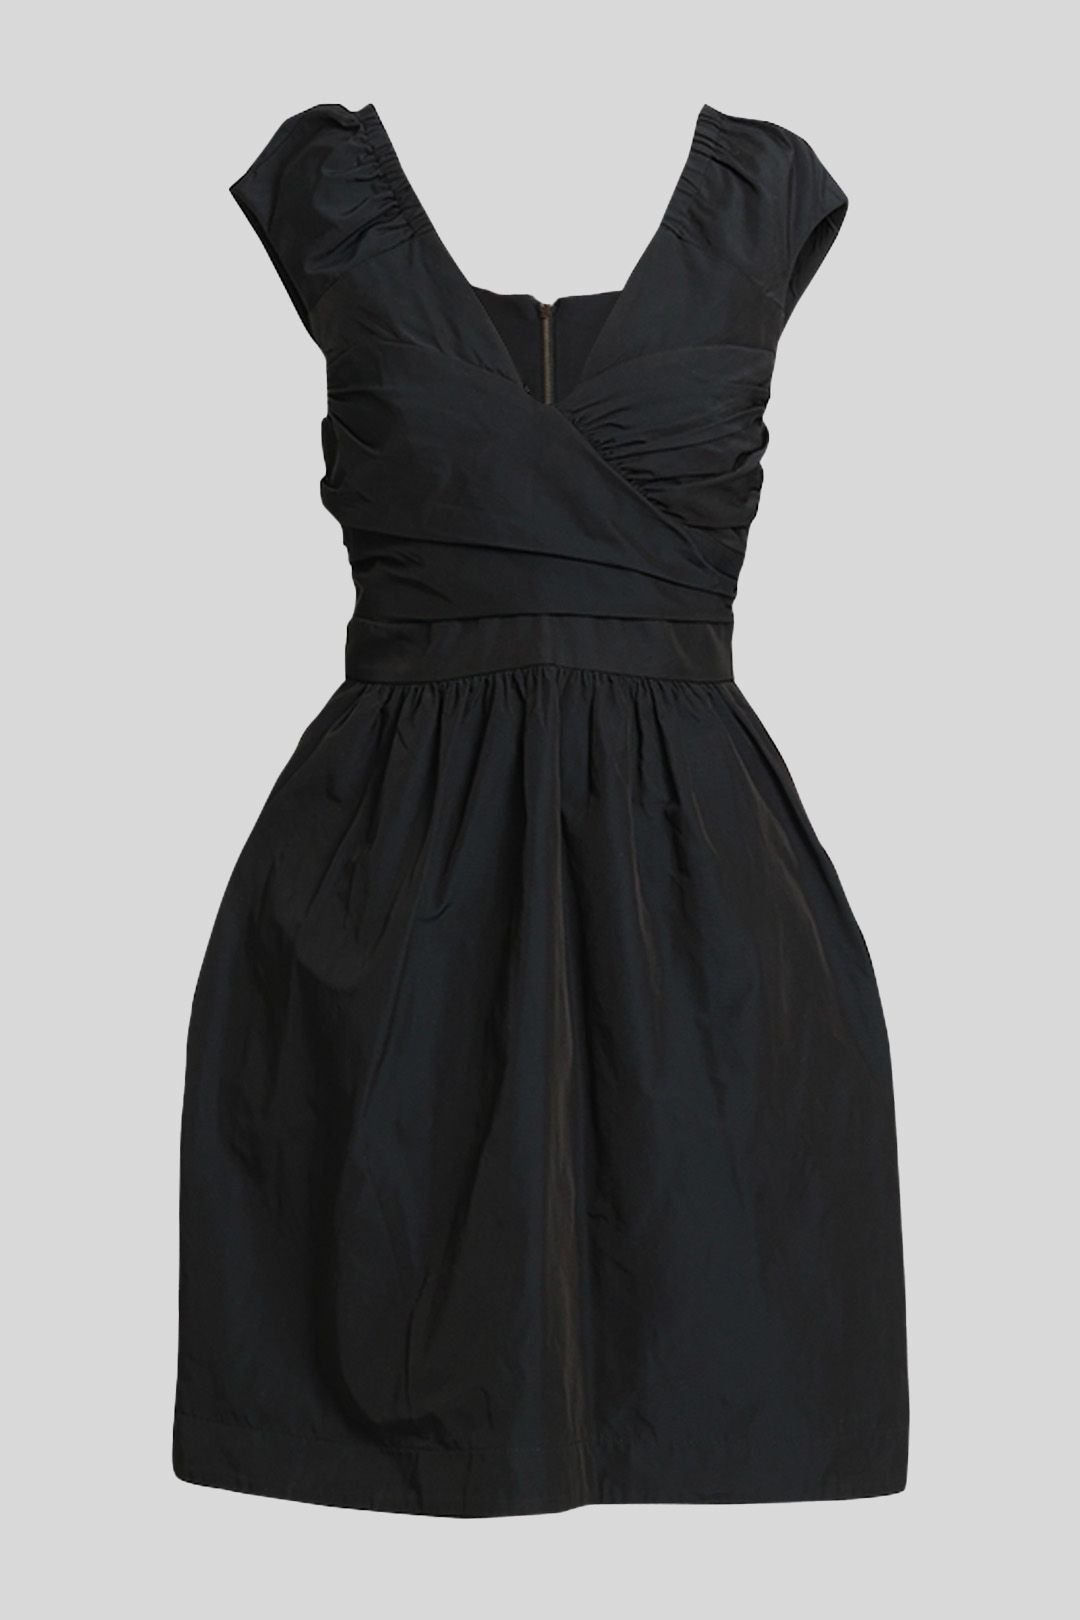 Cue Gathered Detail Black Mini Dress